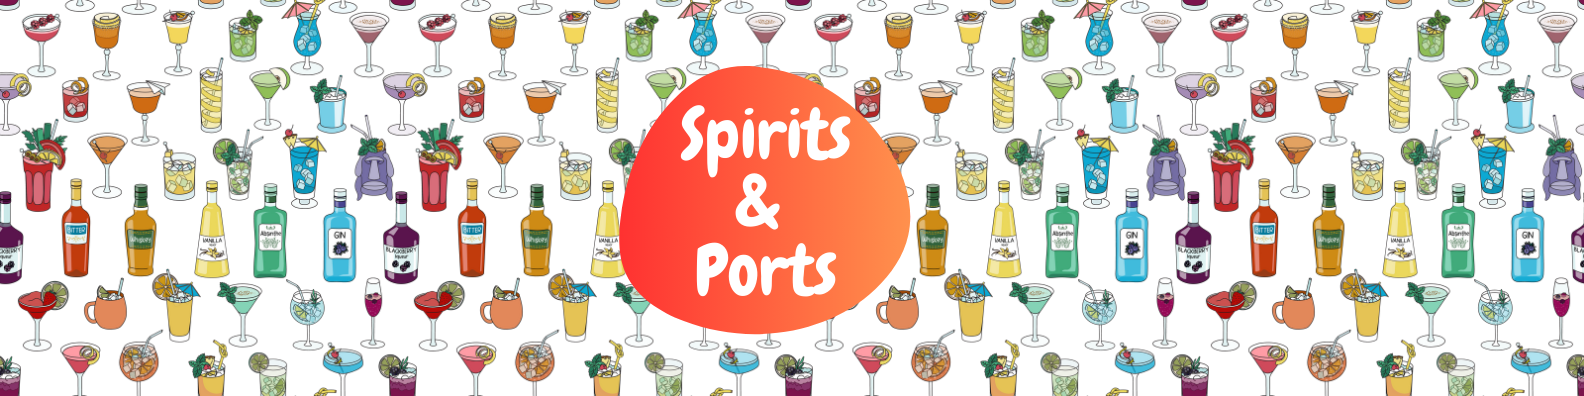 Spirits & Ports